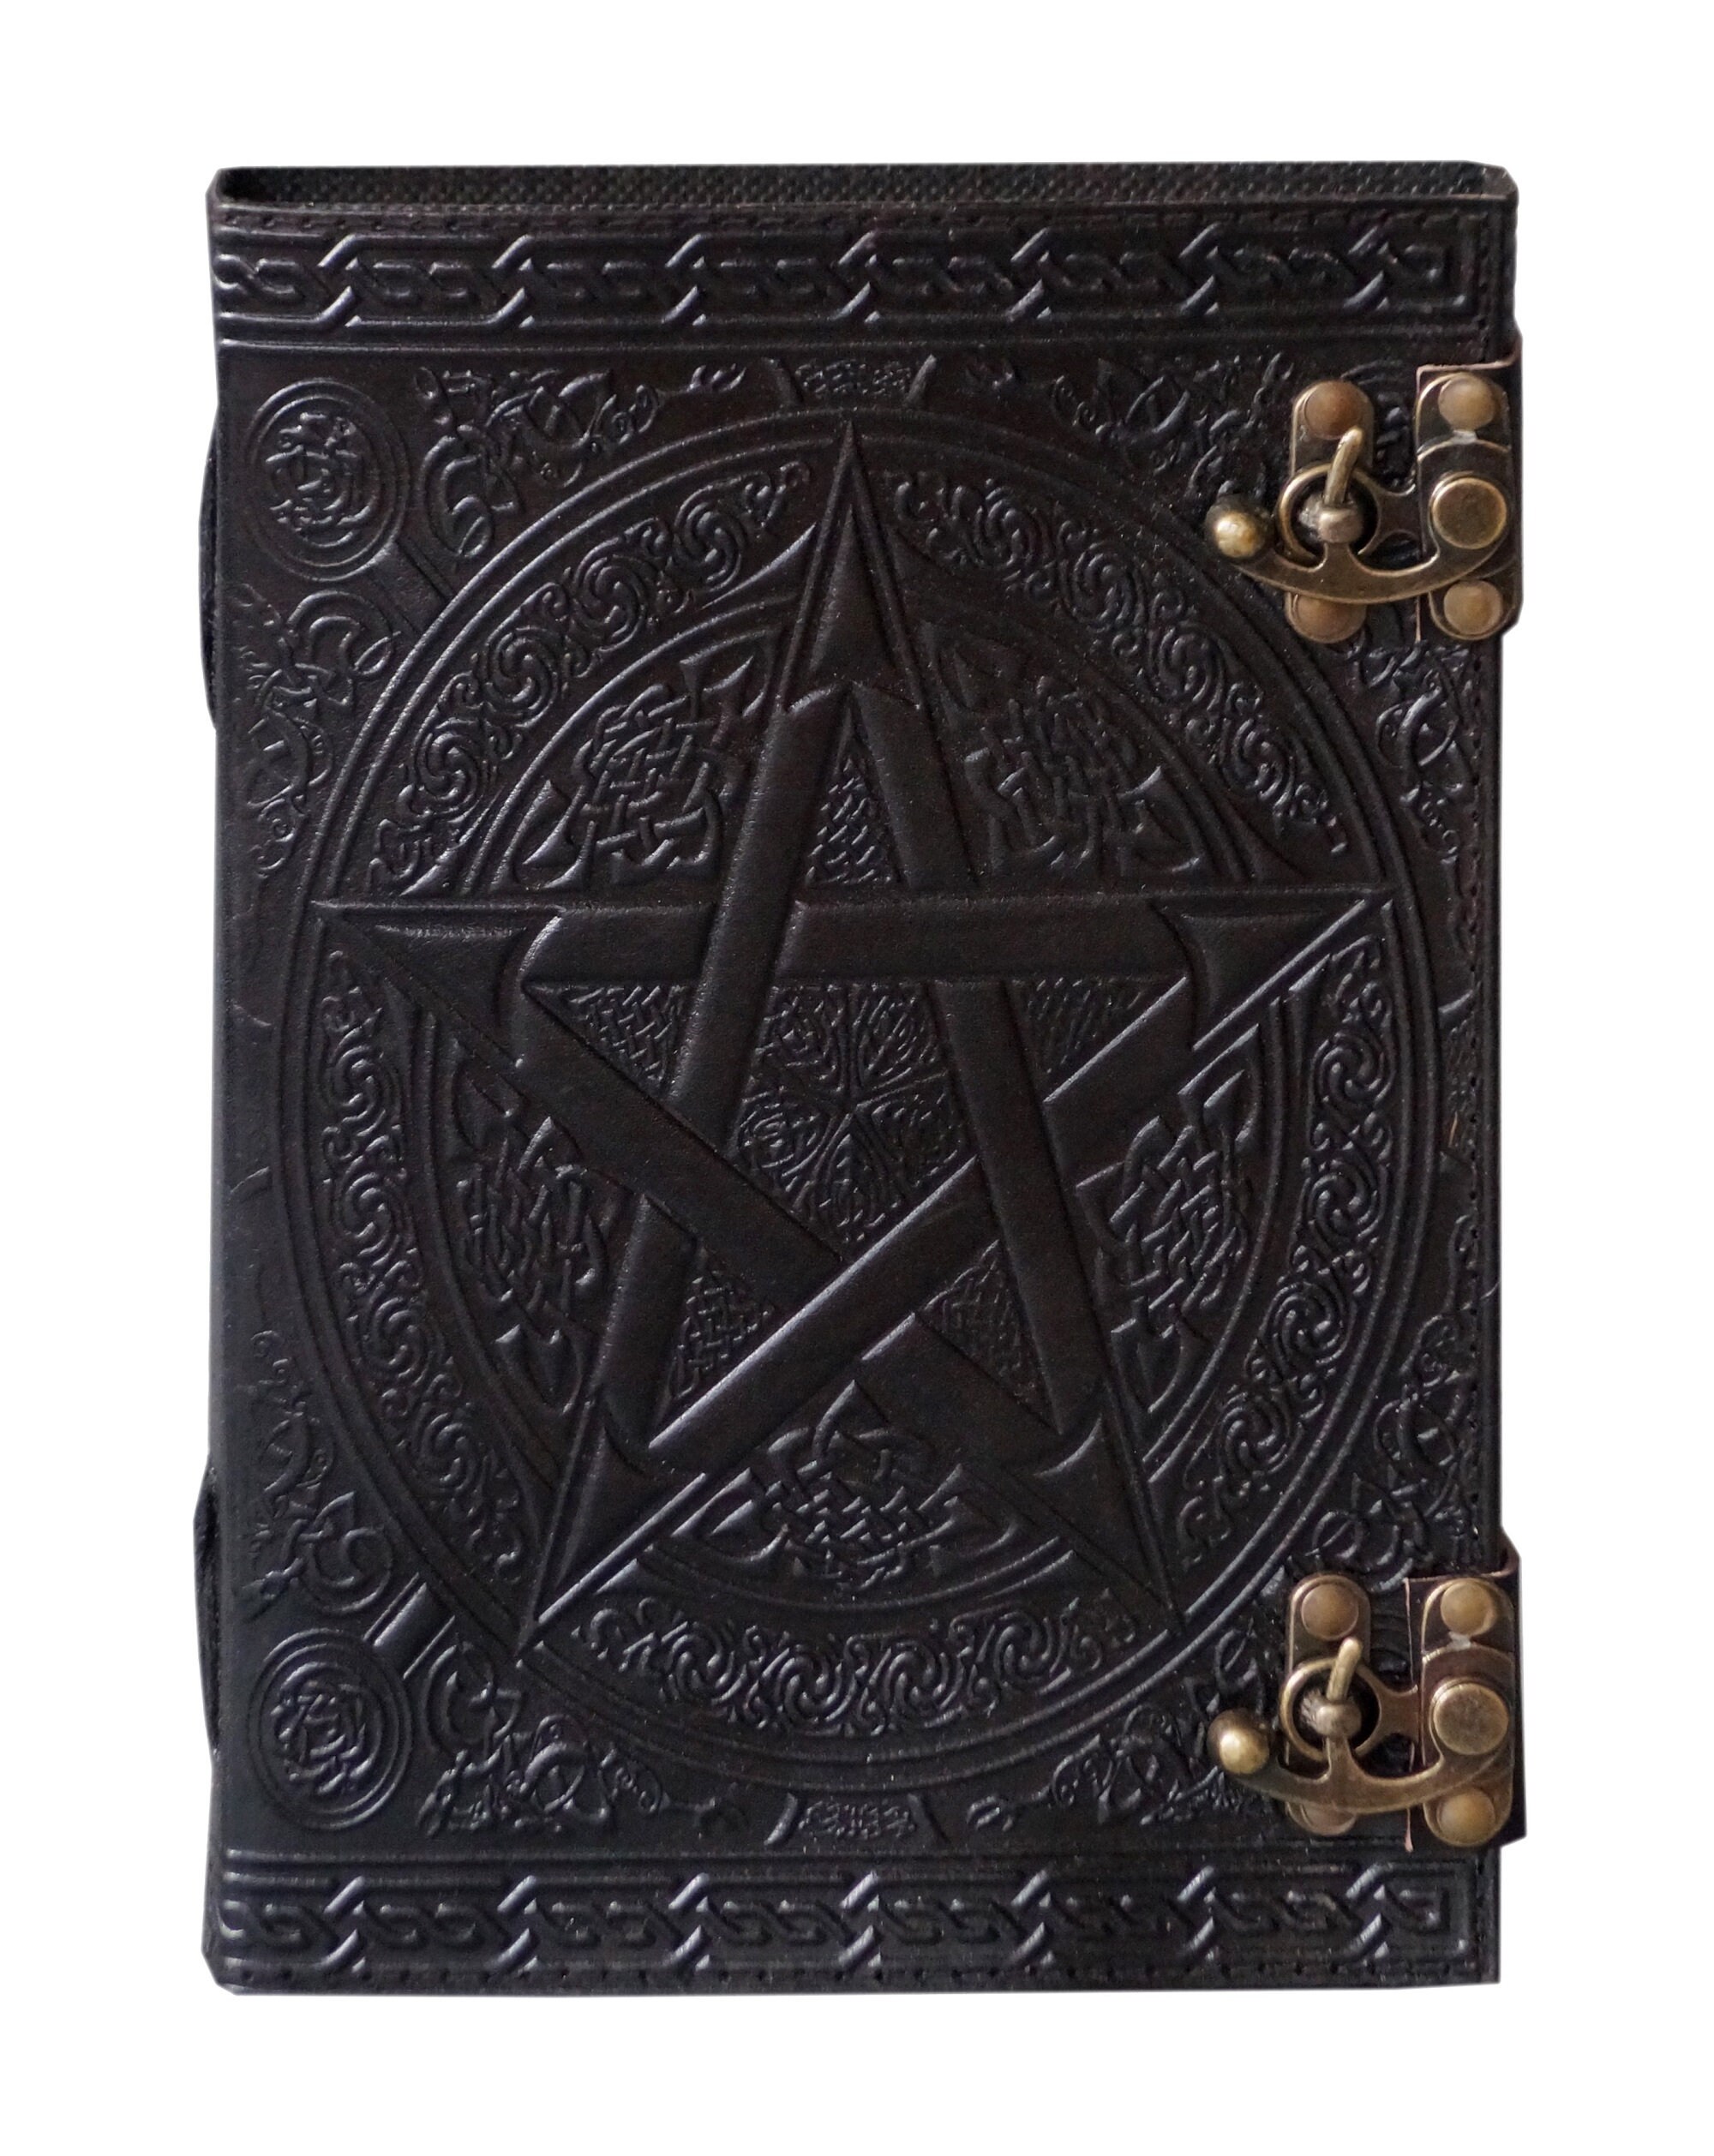 Huge Big Grimoire Pentagram Leather Spell Book of Shadows 